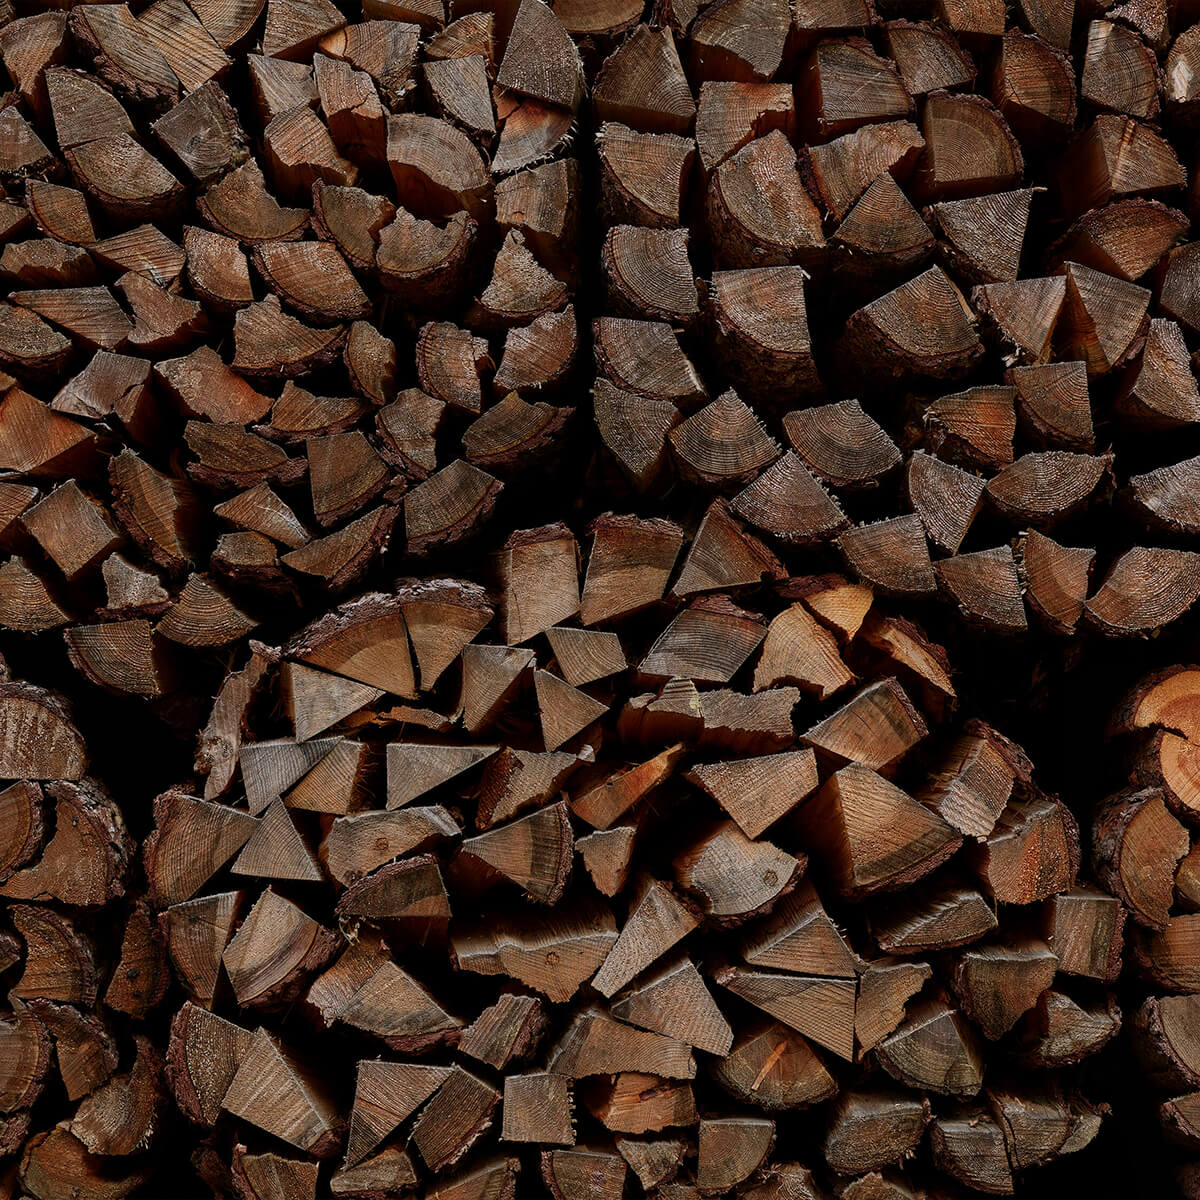 Round piles of wood